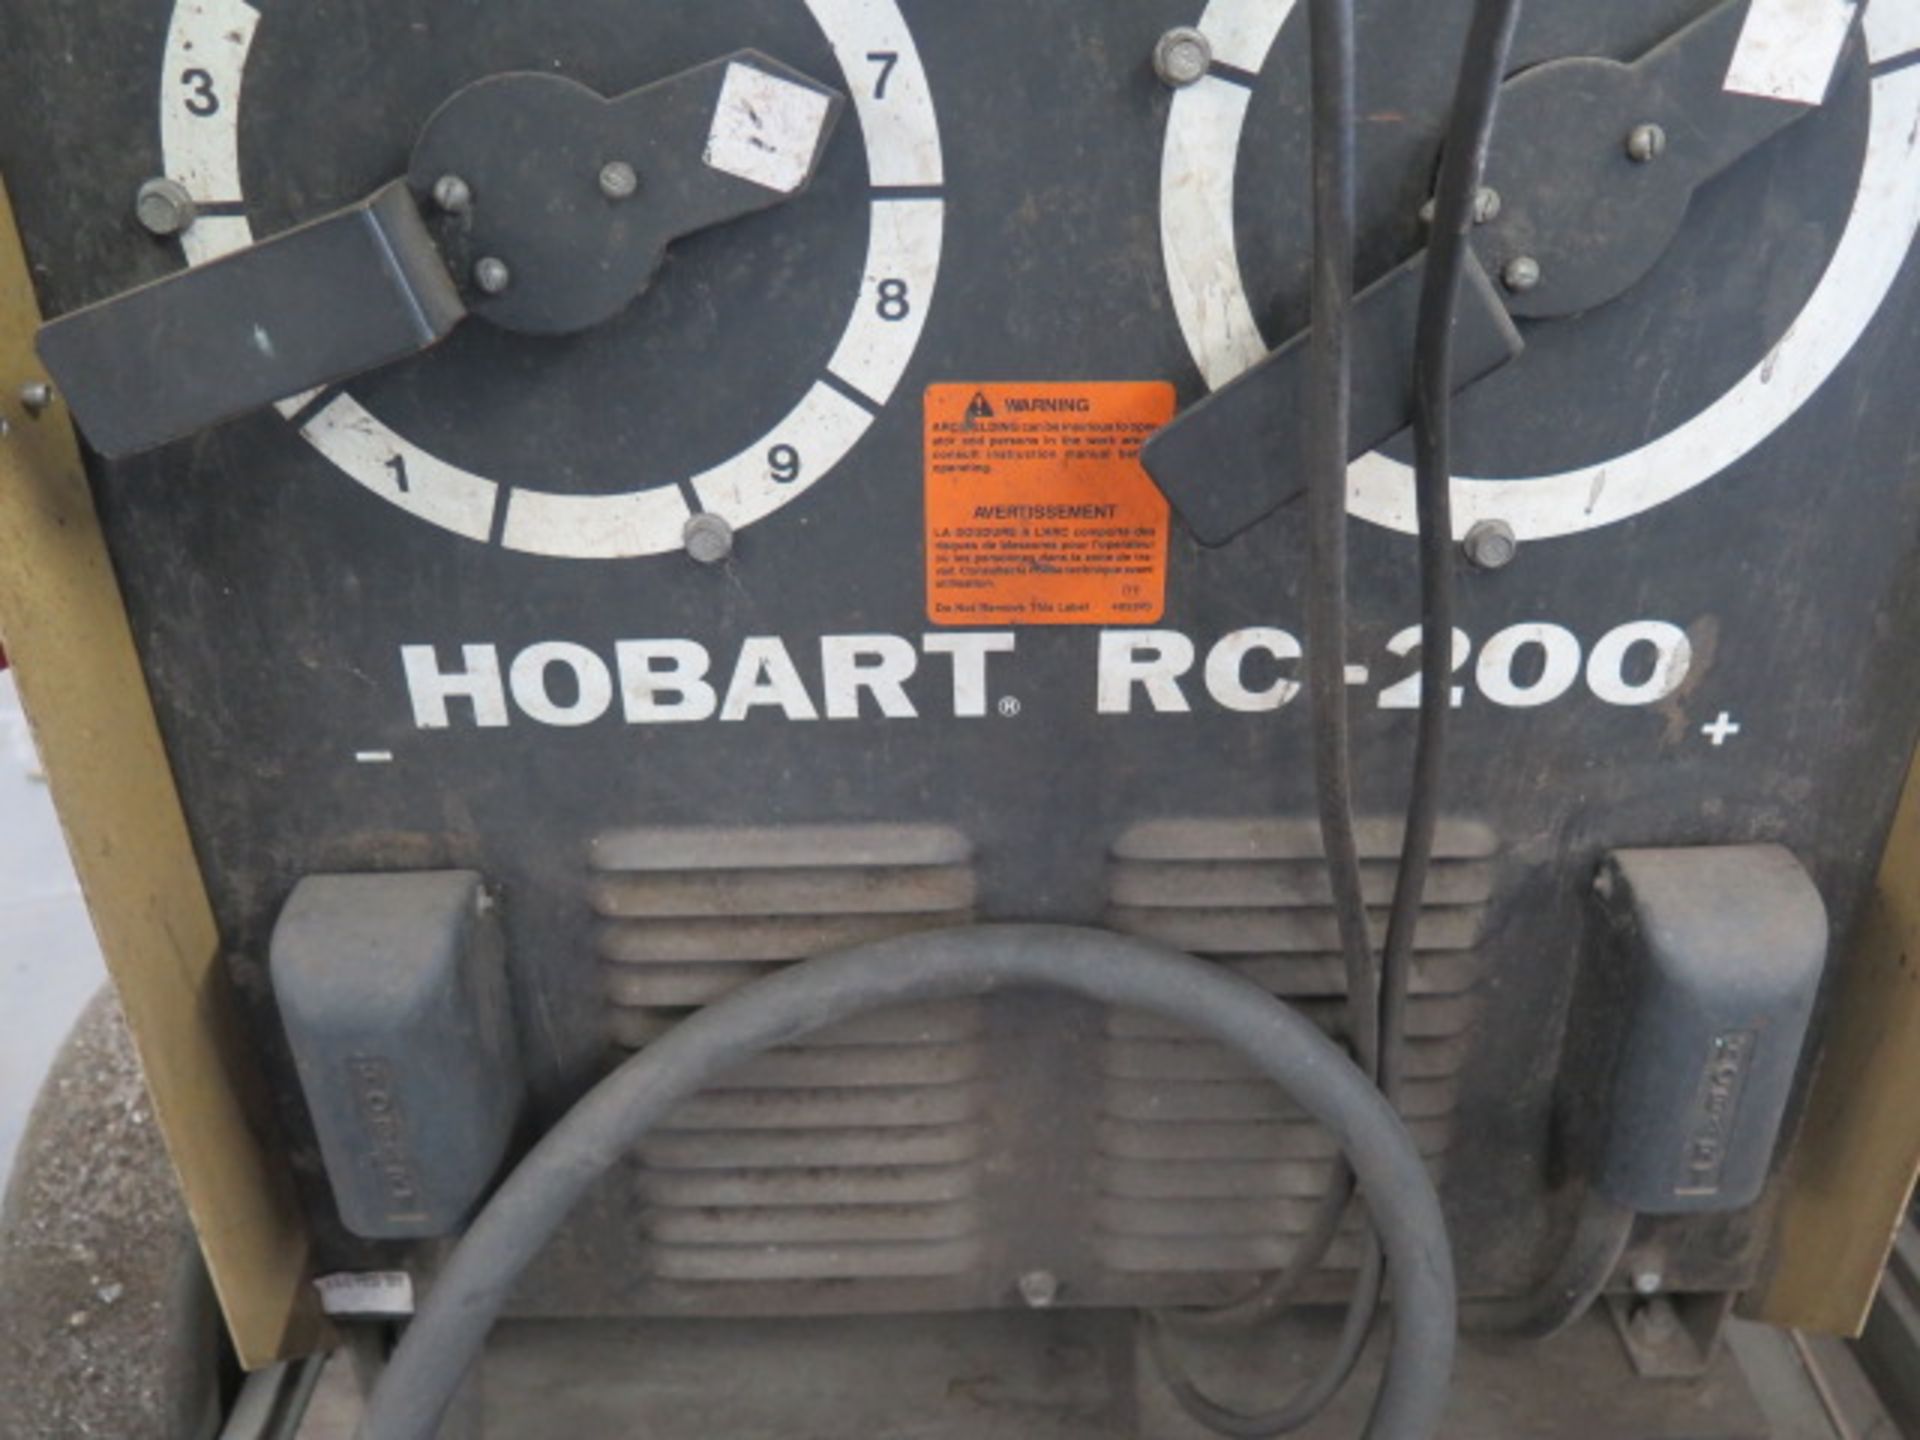 Hobart RC-200 Arc welding Power Source w/ Hobart-17 Wire Feeder - Image 4 of 10